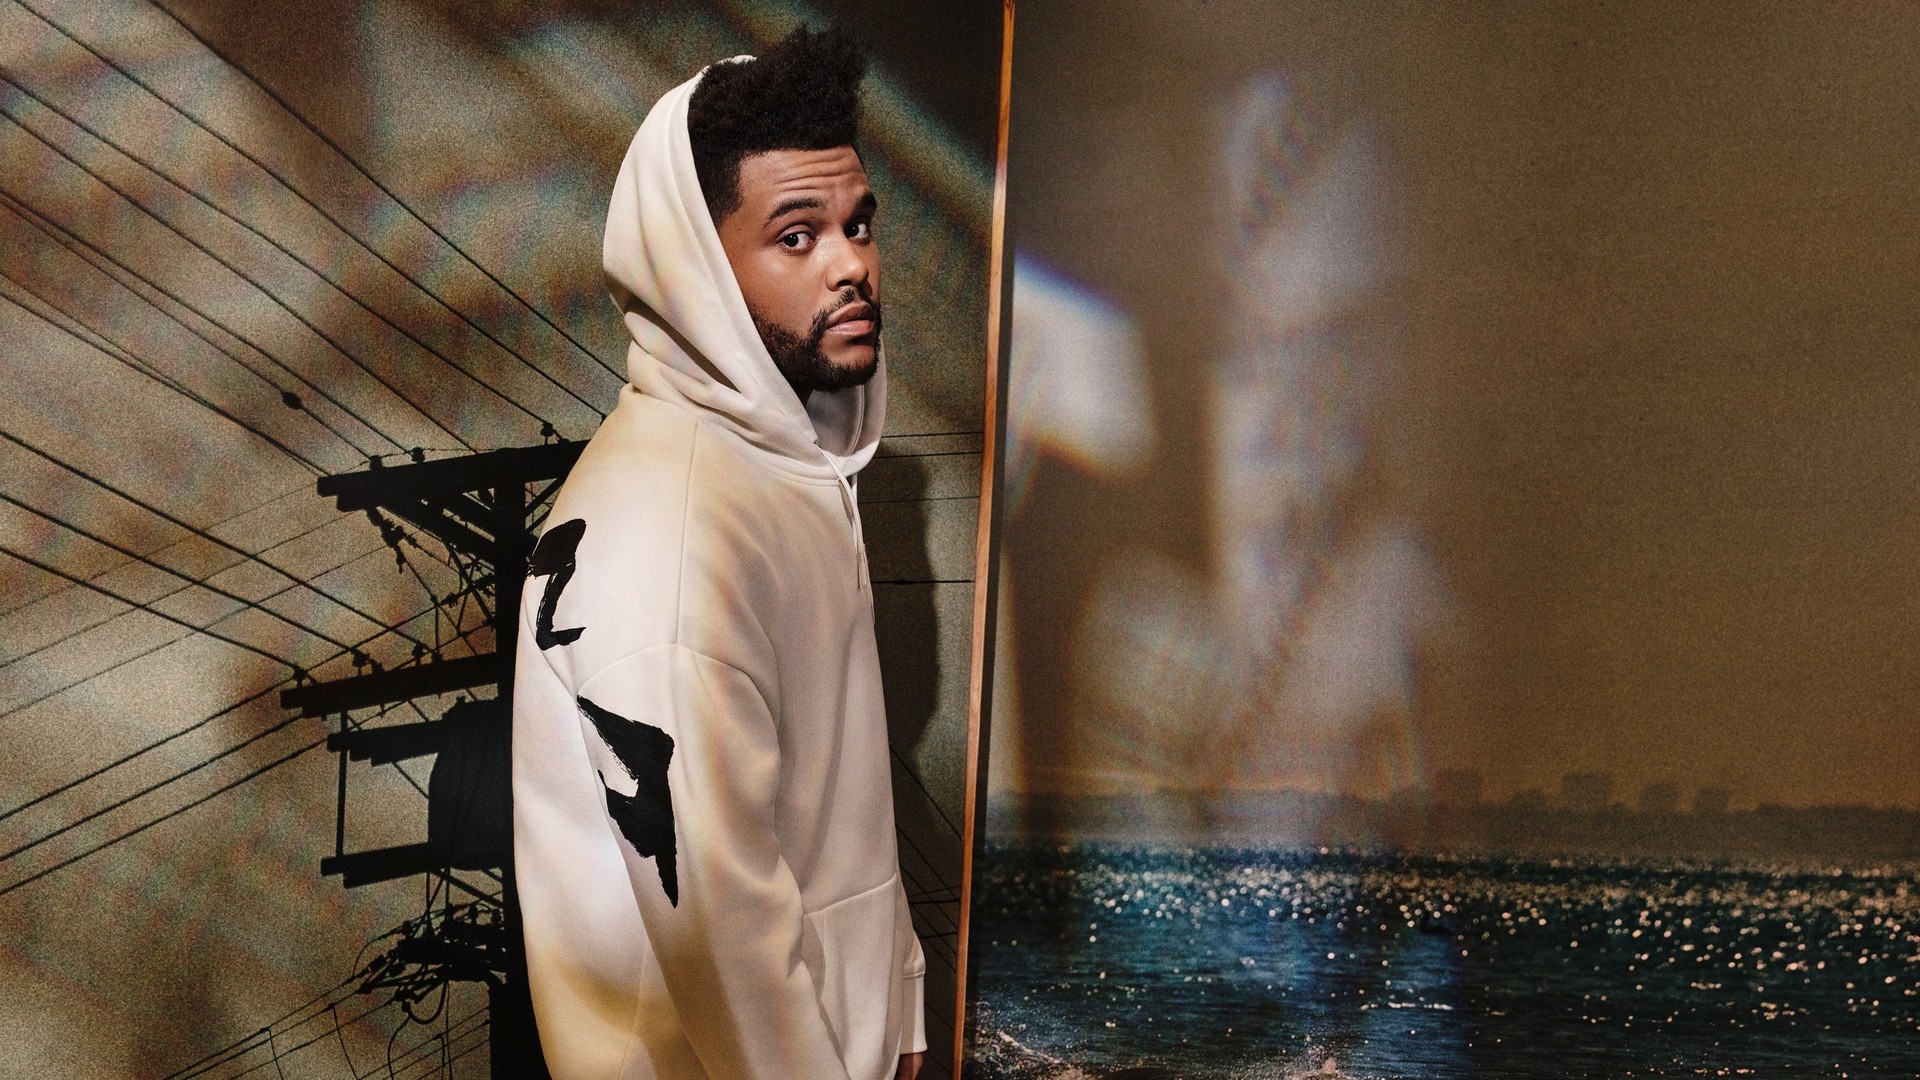 The Weeknd wallpaper photo hd